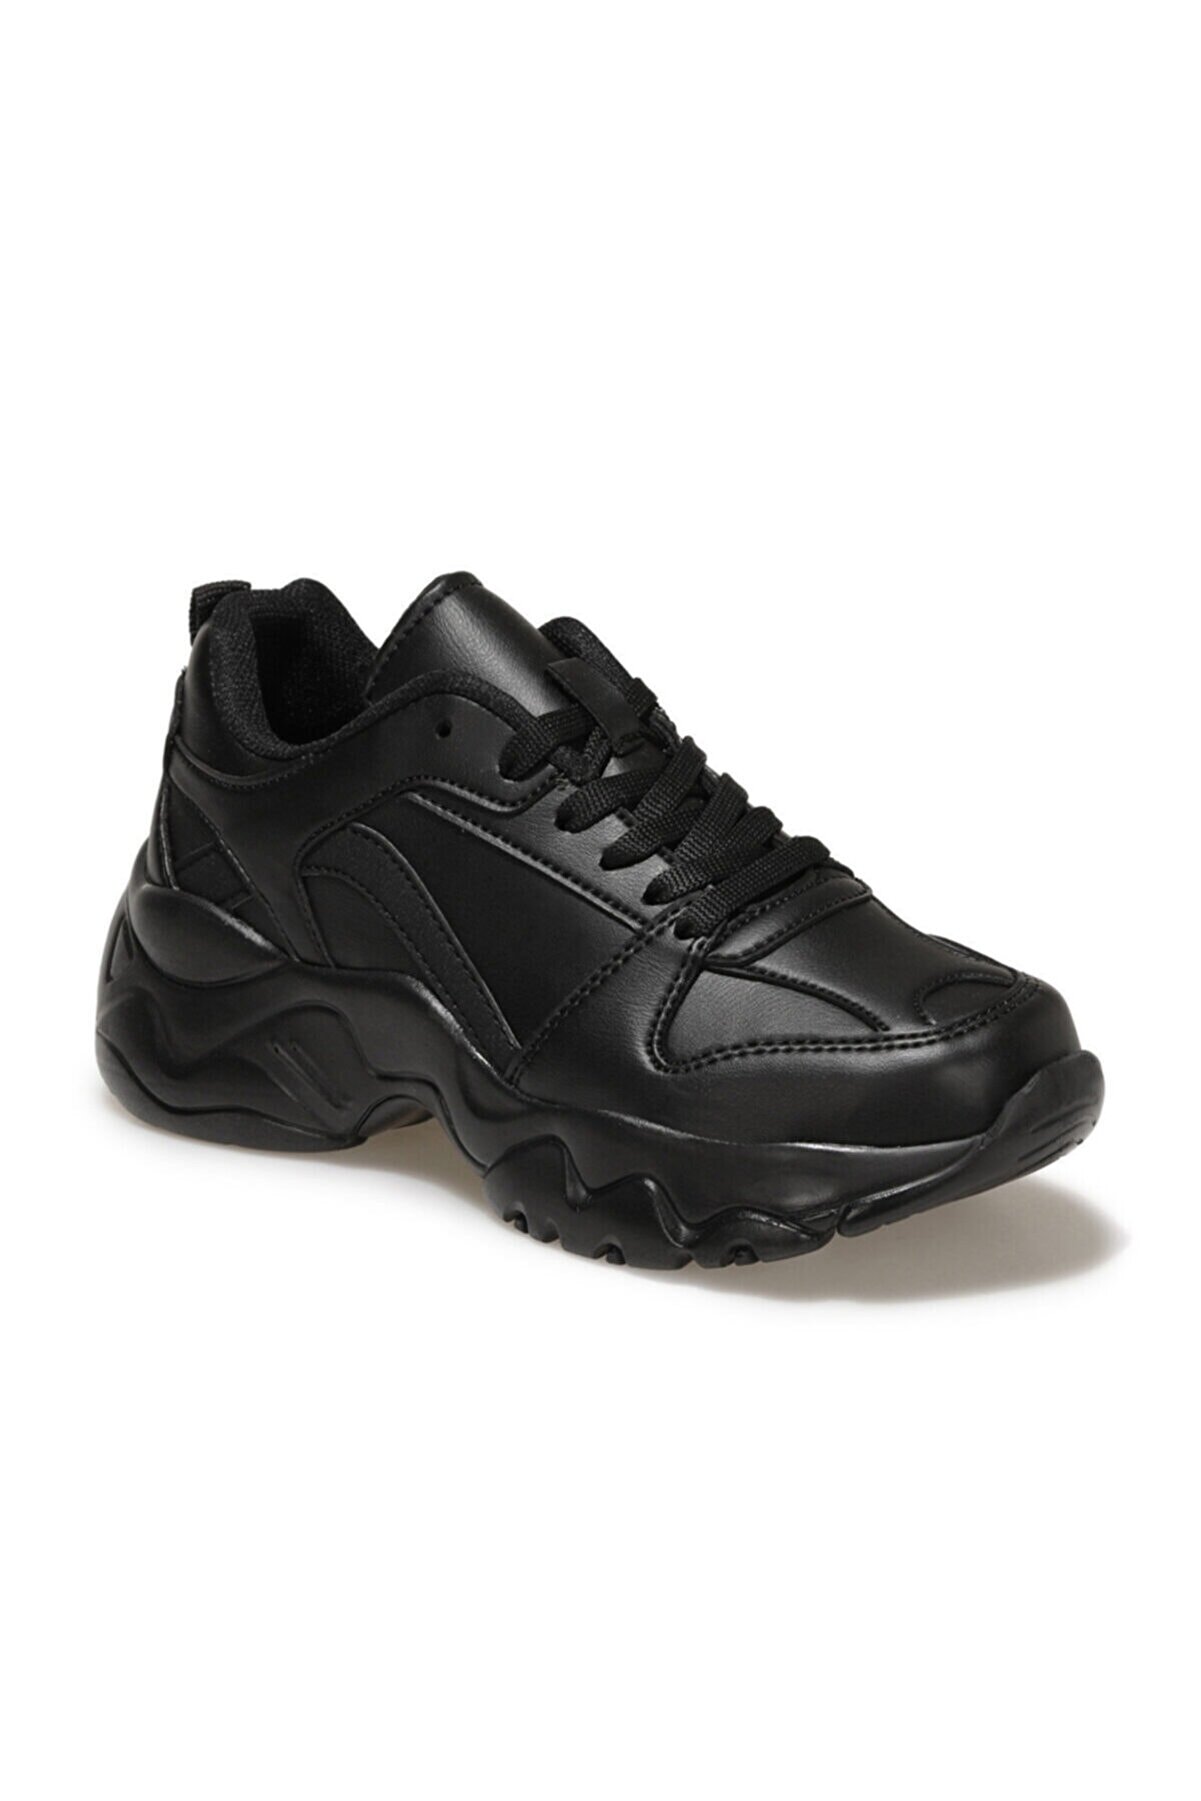 Torex ELENORA W 1FX Siyah Kadın Sneaker Ayakkabı 101021707